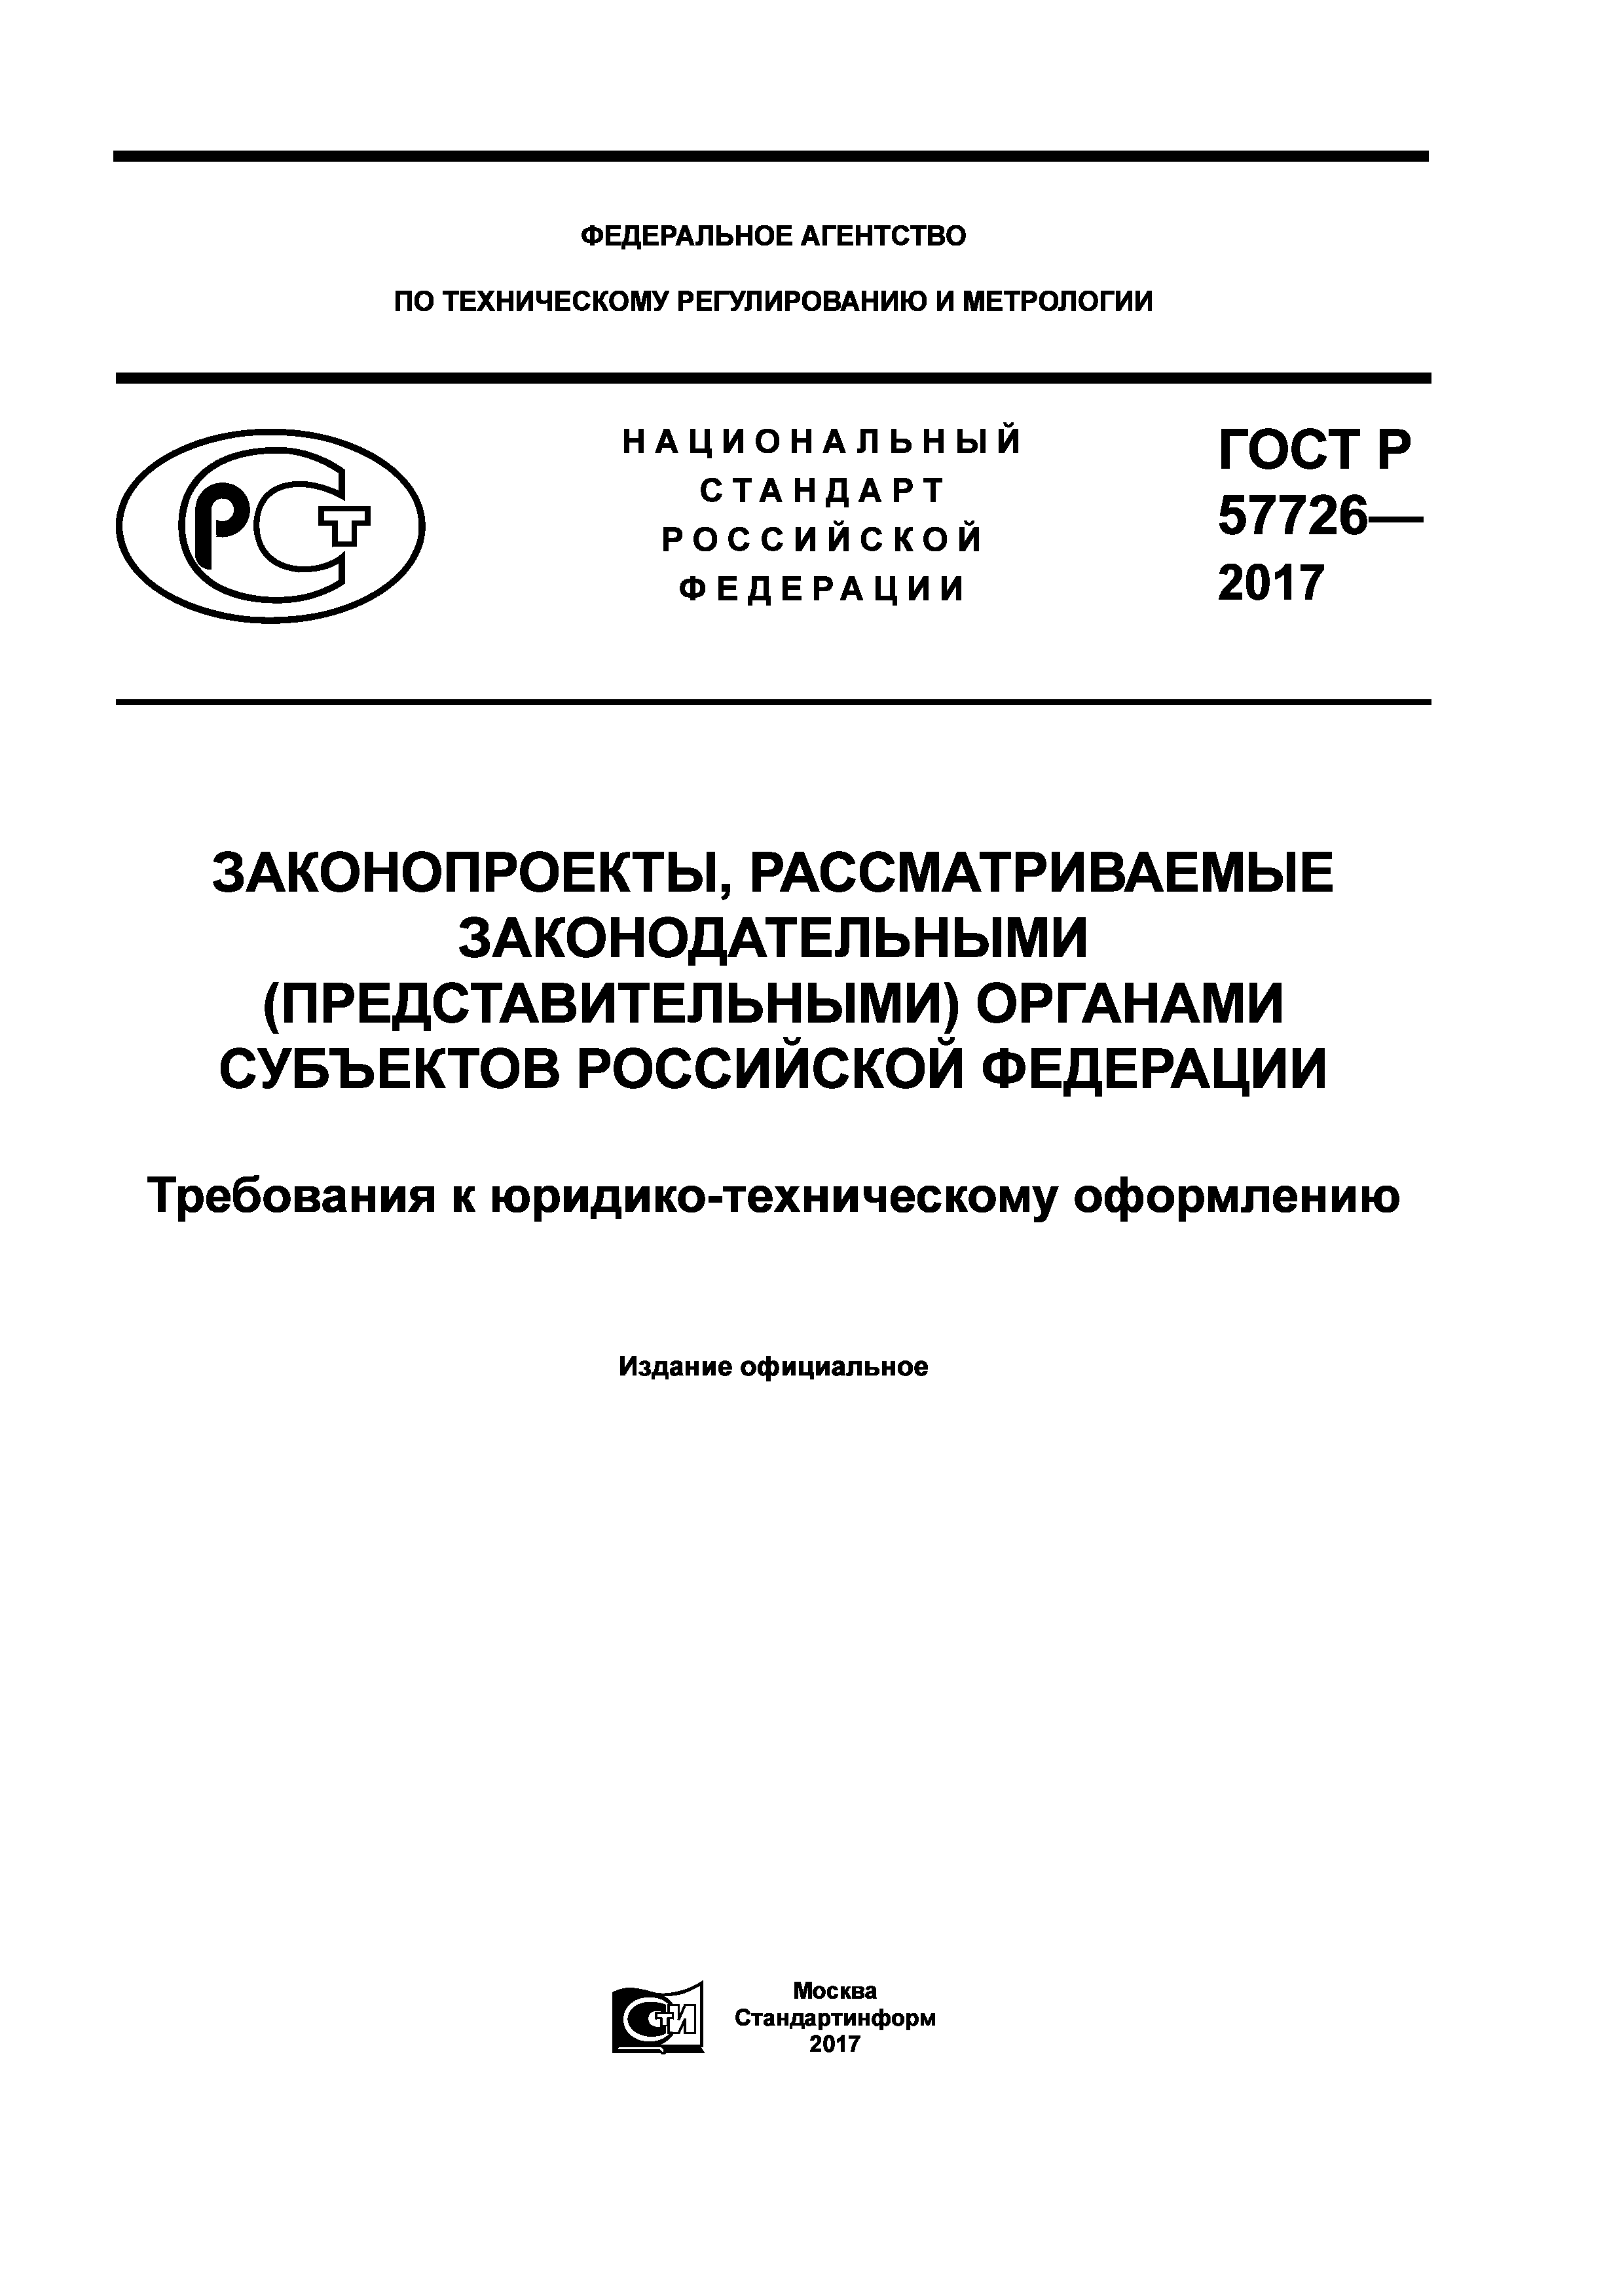 ГОСТ Р 57726-2017